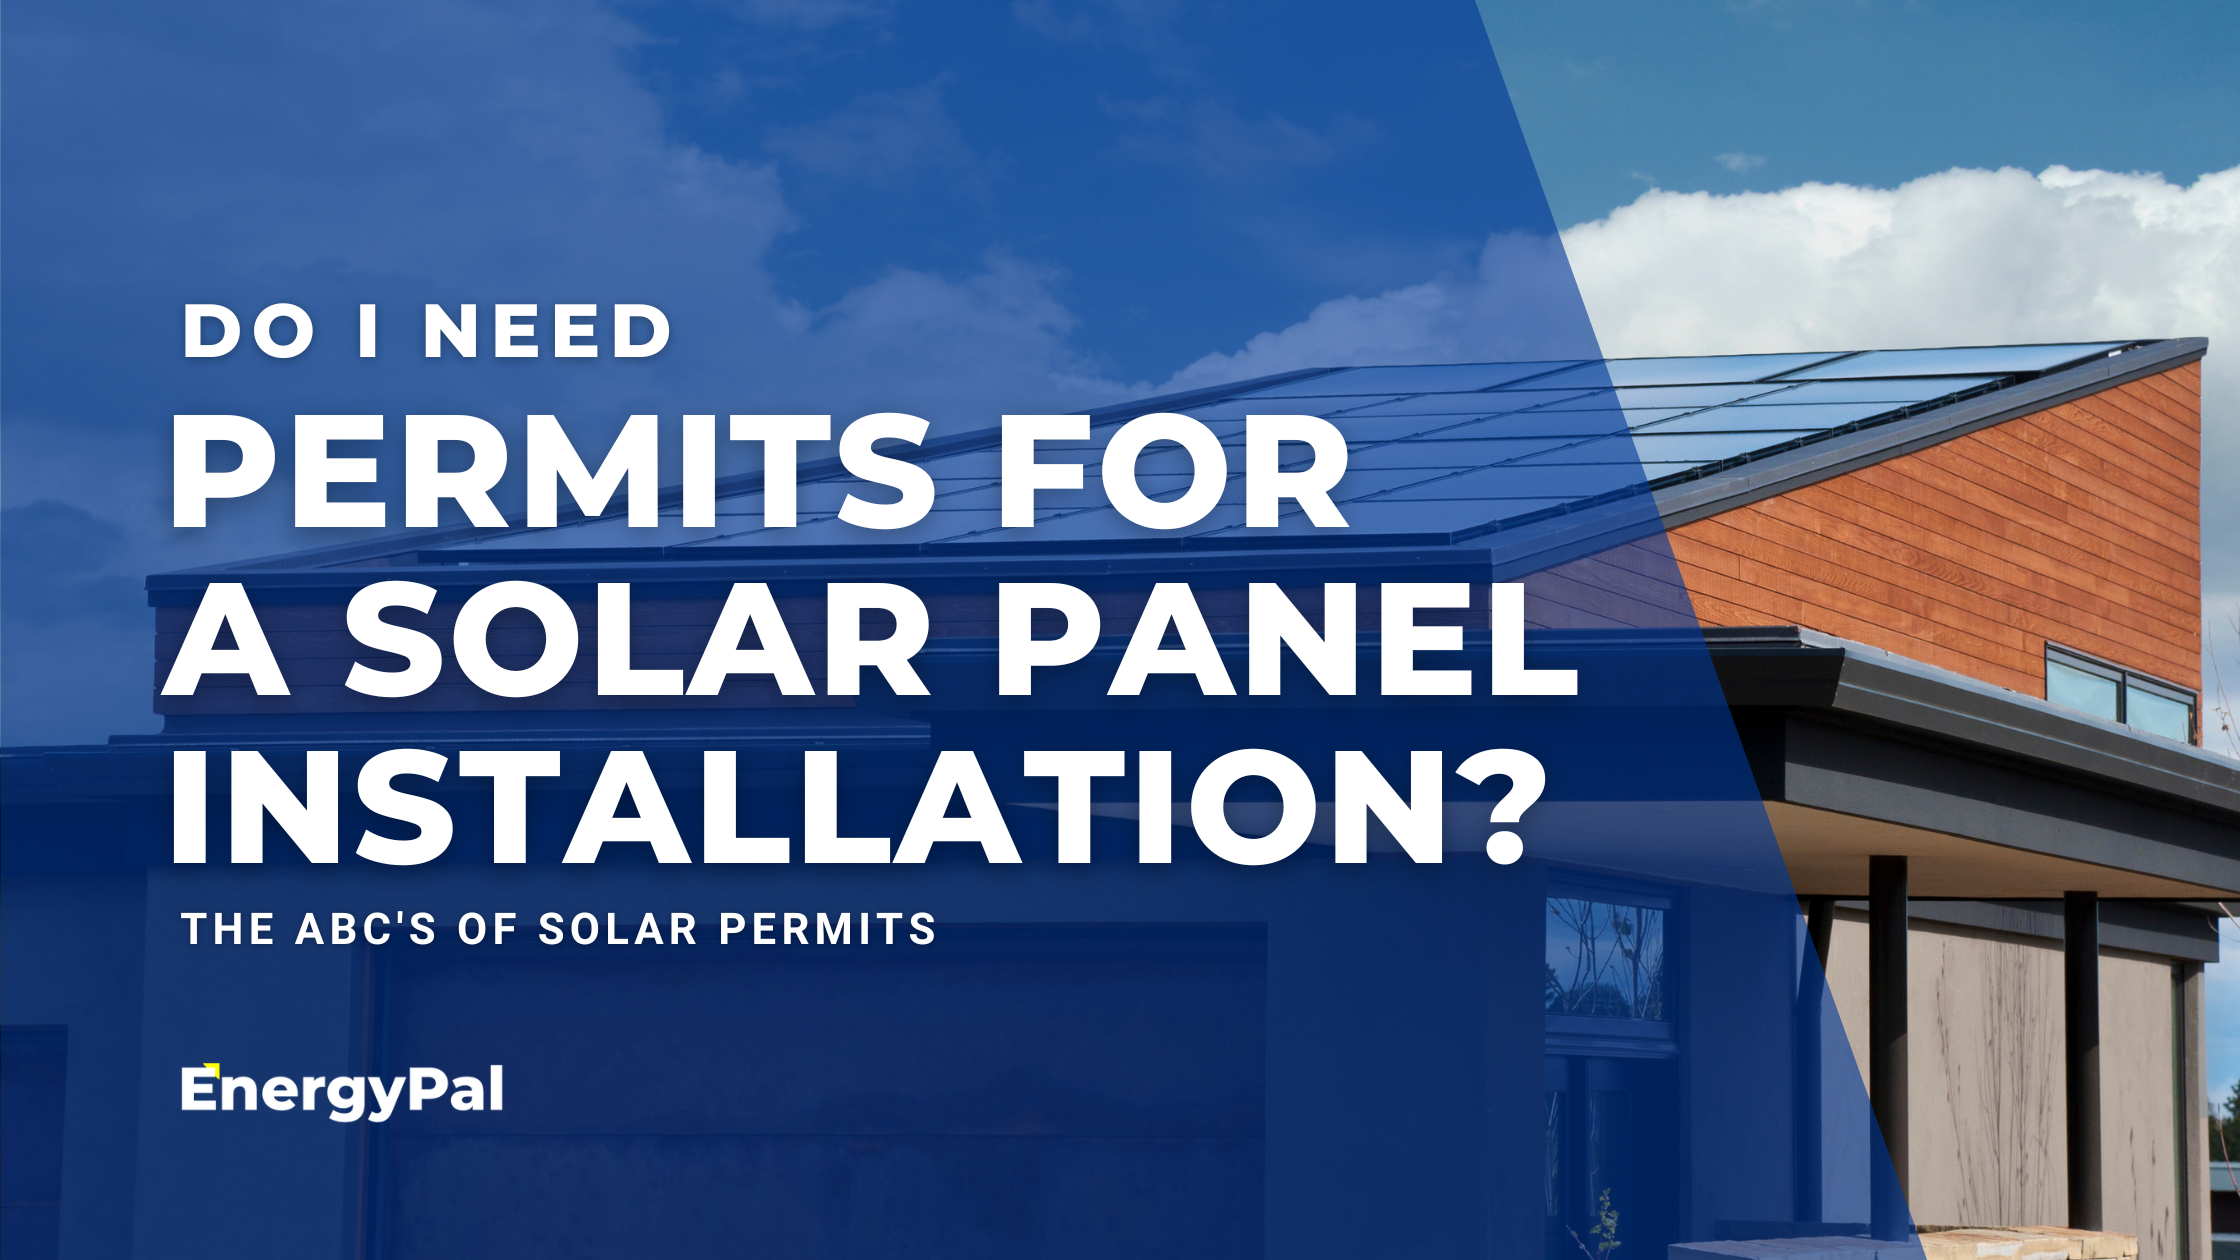 Do I Need Permits For A Solar Panel Installation?